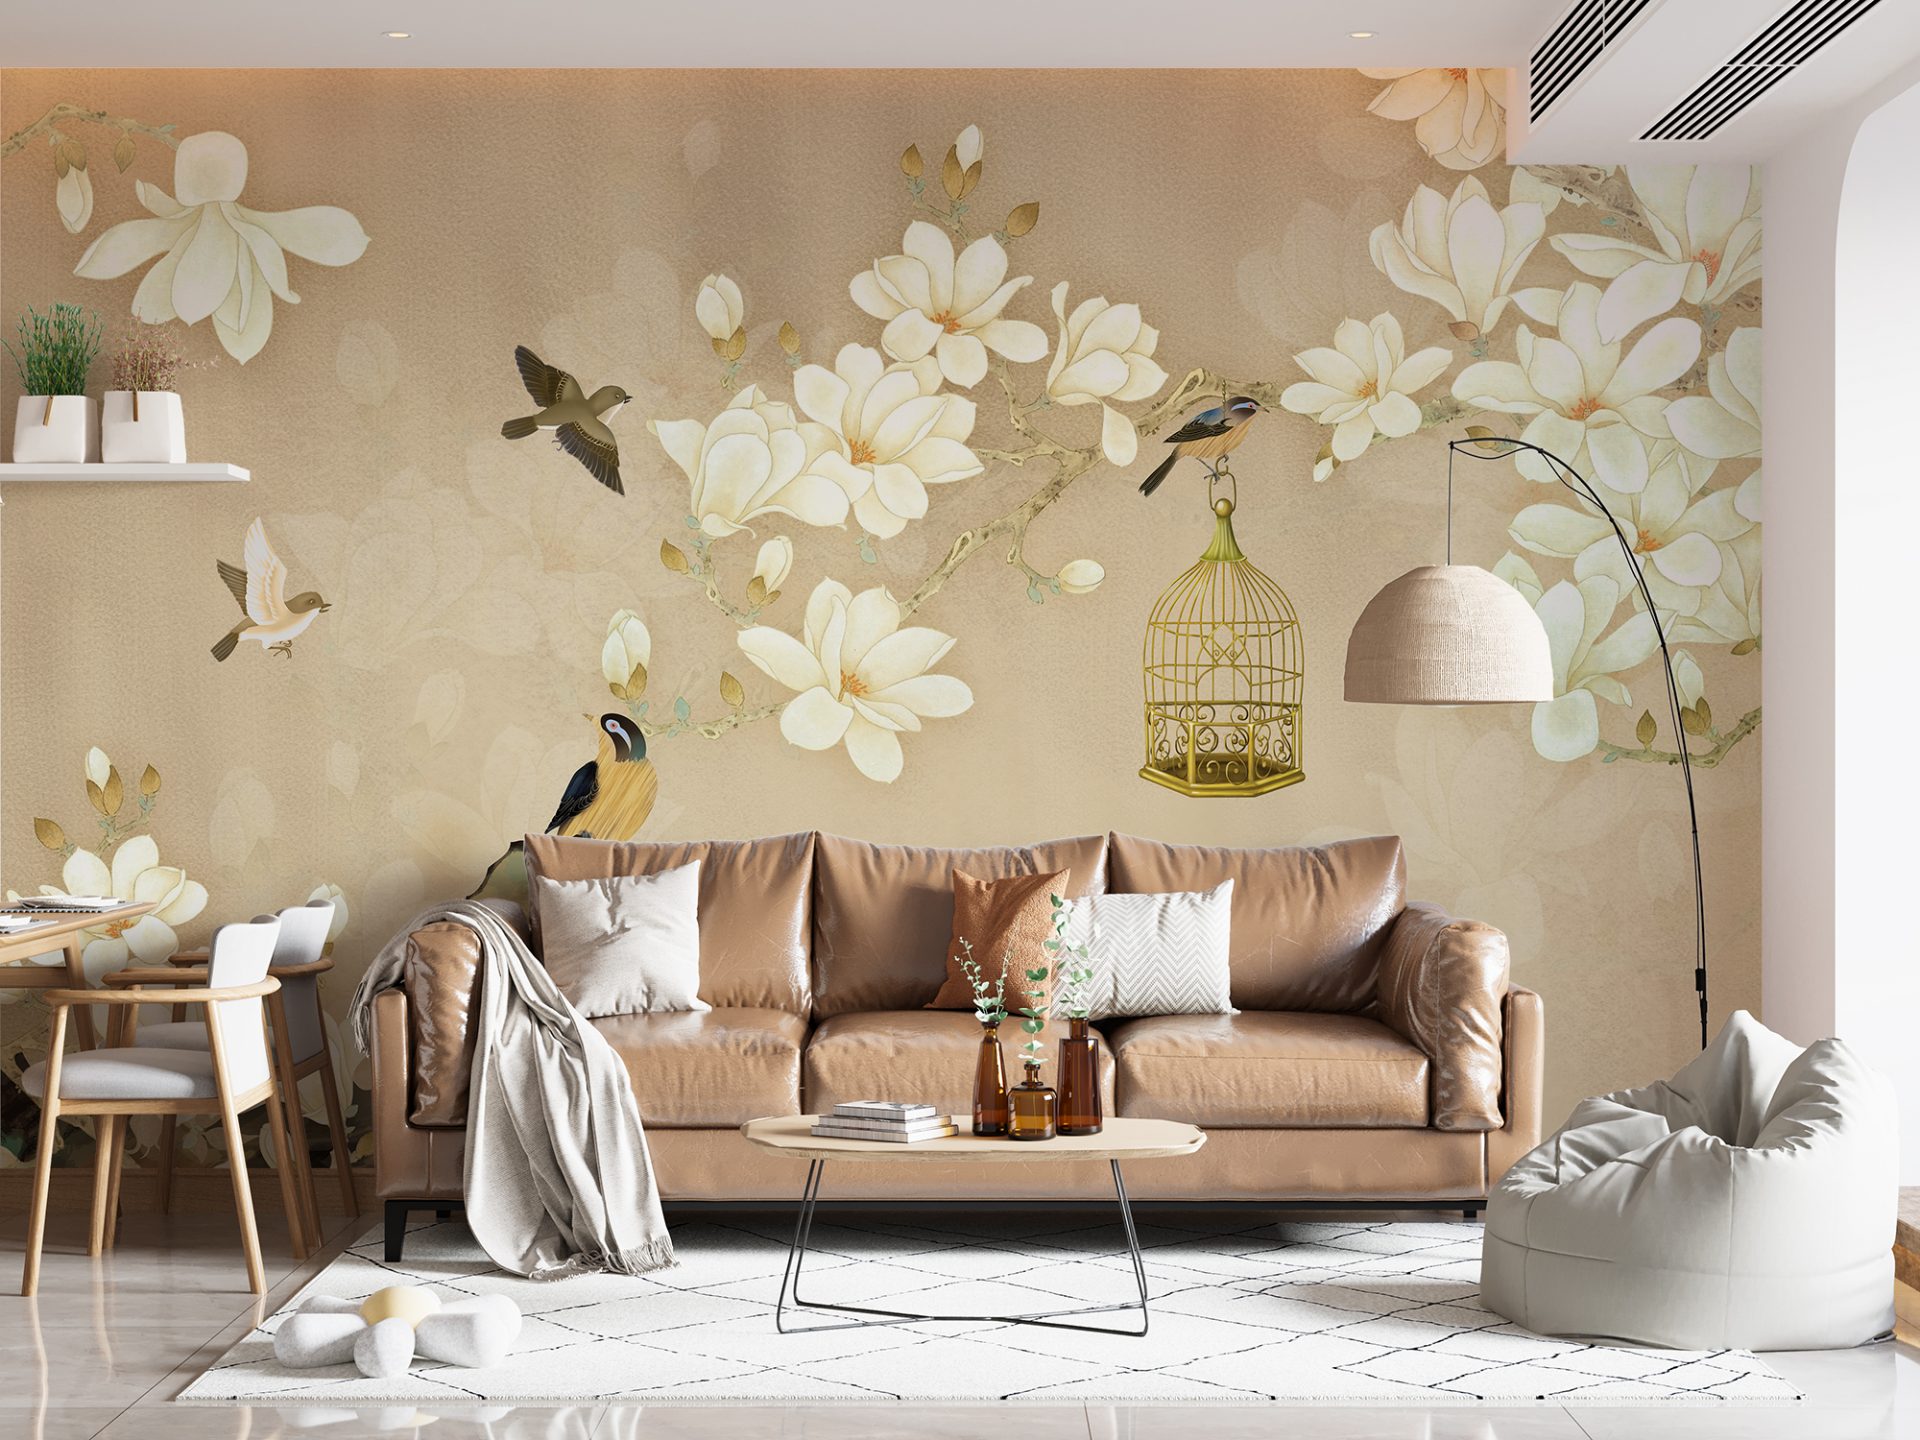 2019 Home Design Trends You Can't Miss – Hadley Court | Wallpaper living  room, Modern wallpaper living room, Living room wall designs